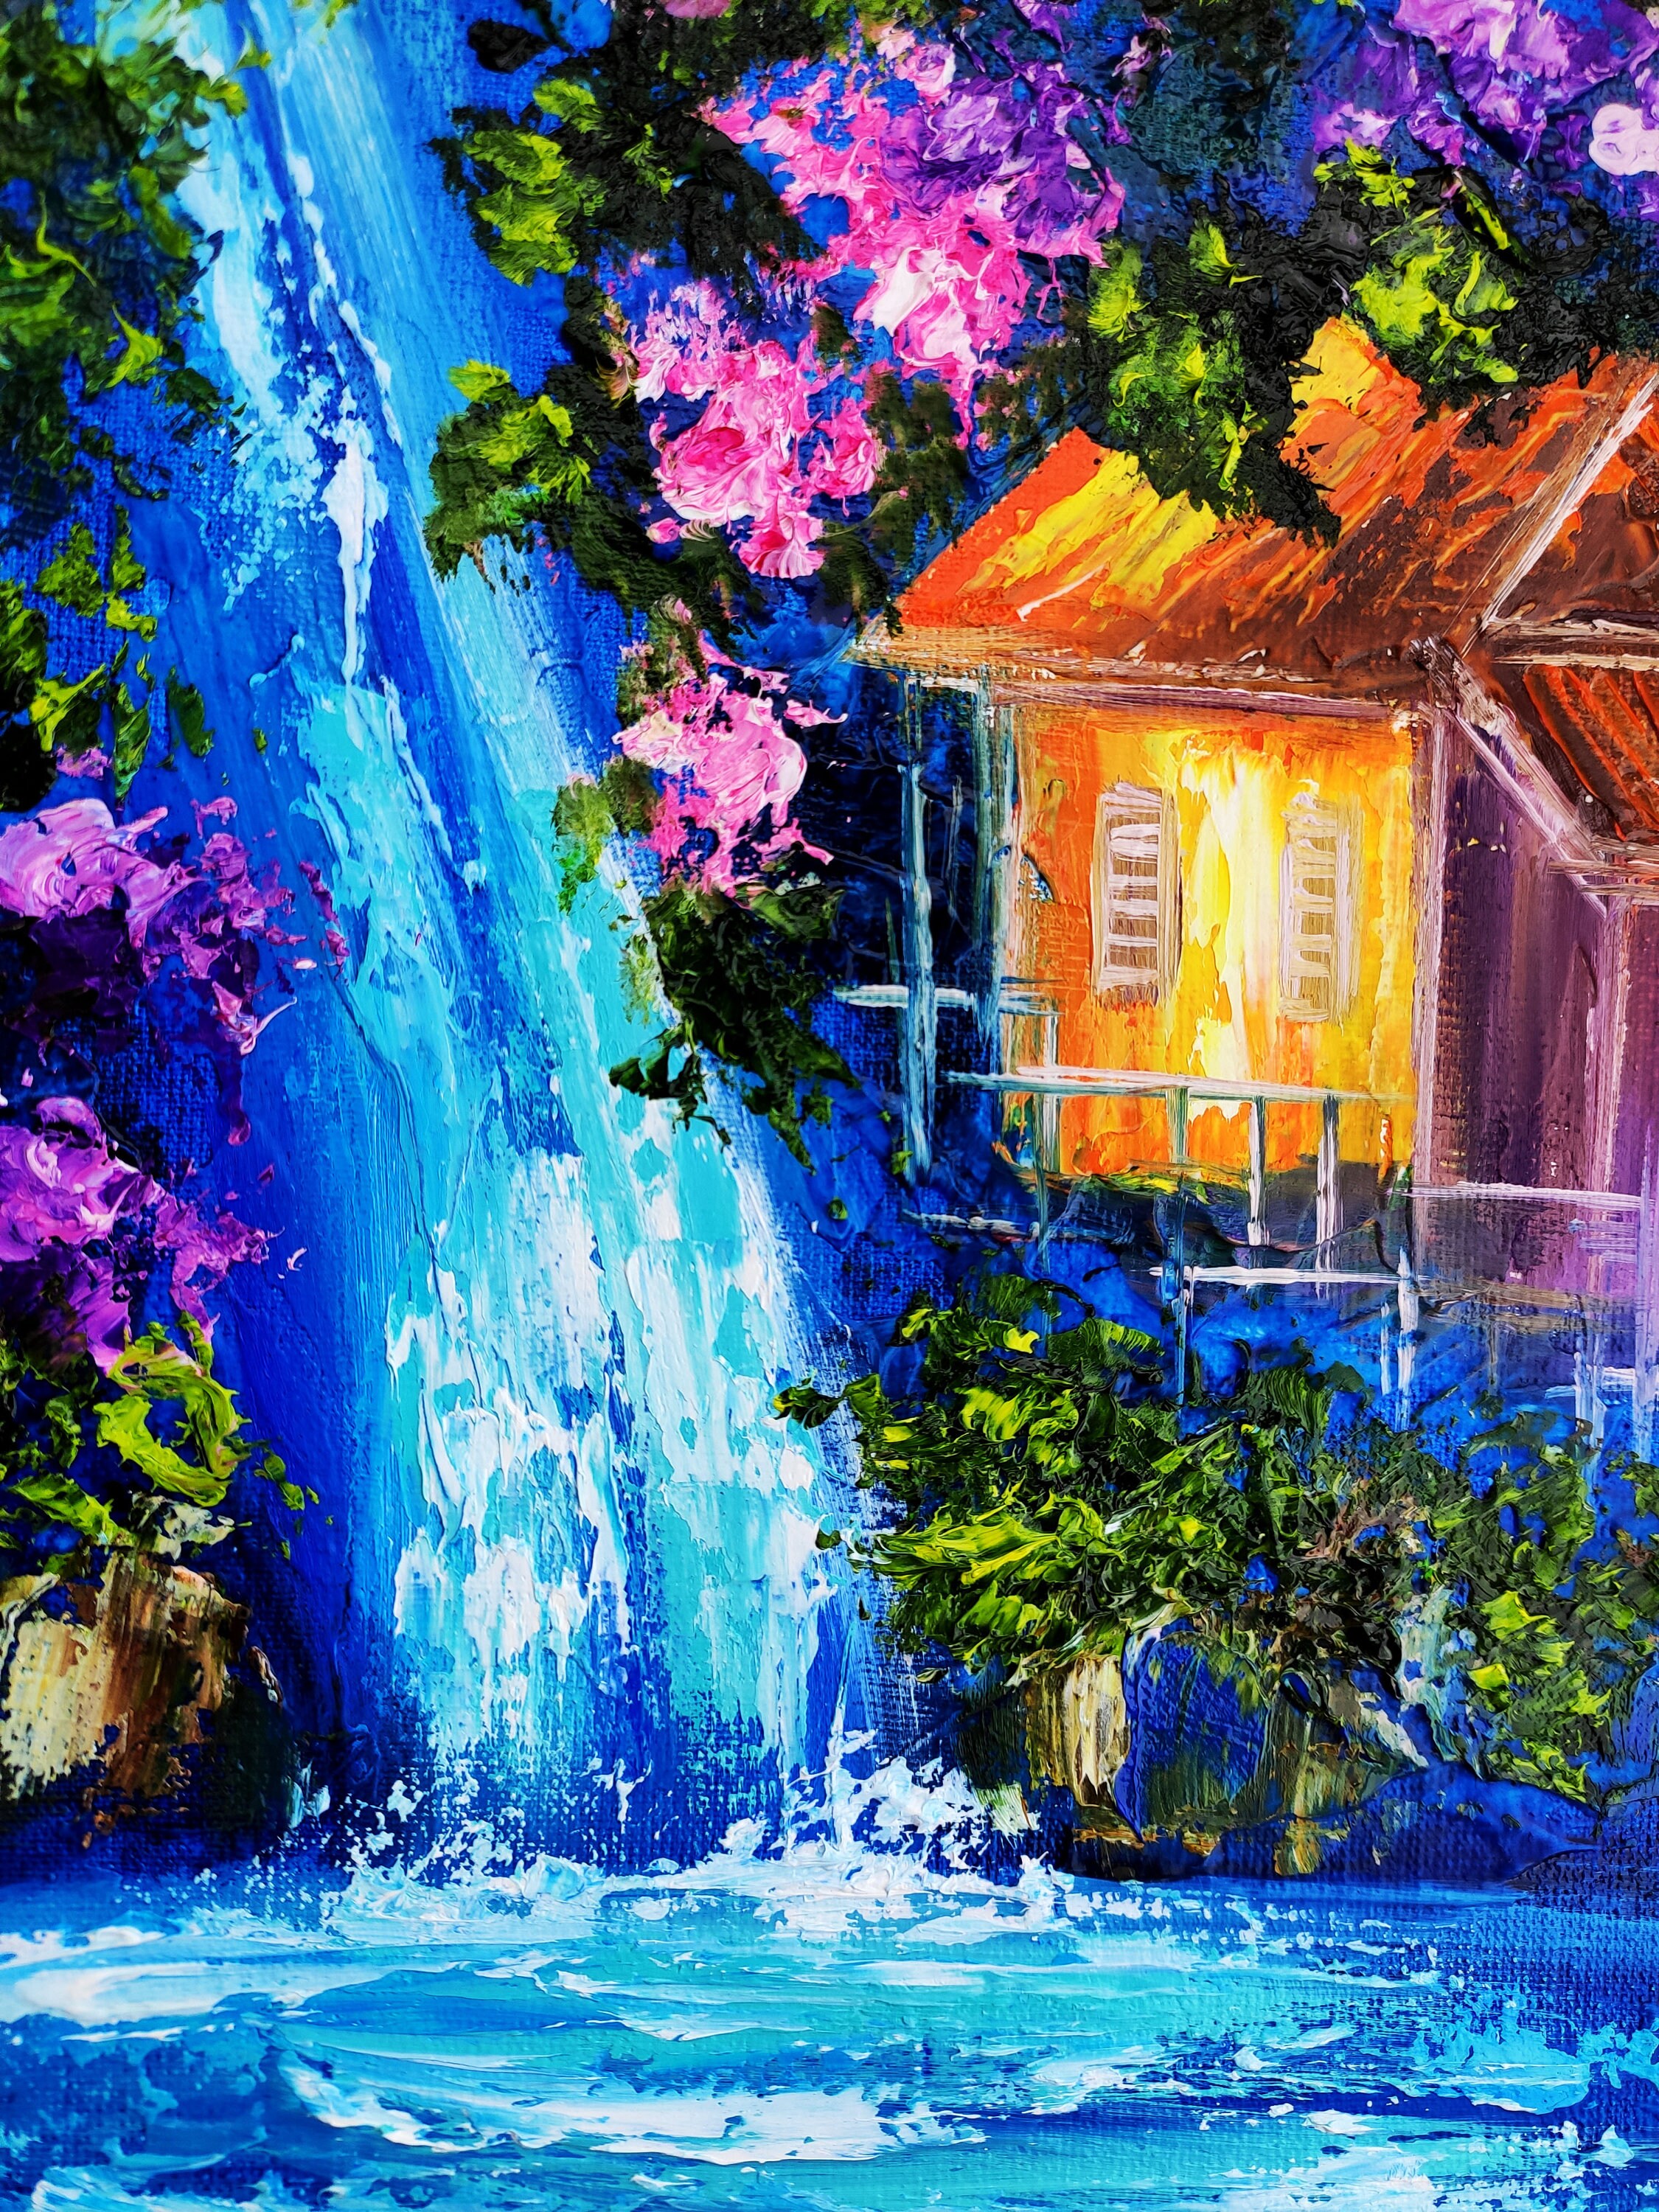 Waterfall Painting with Hawaiian Cottage - Healing Retreat Wall Art Canvas